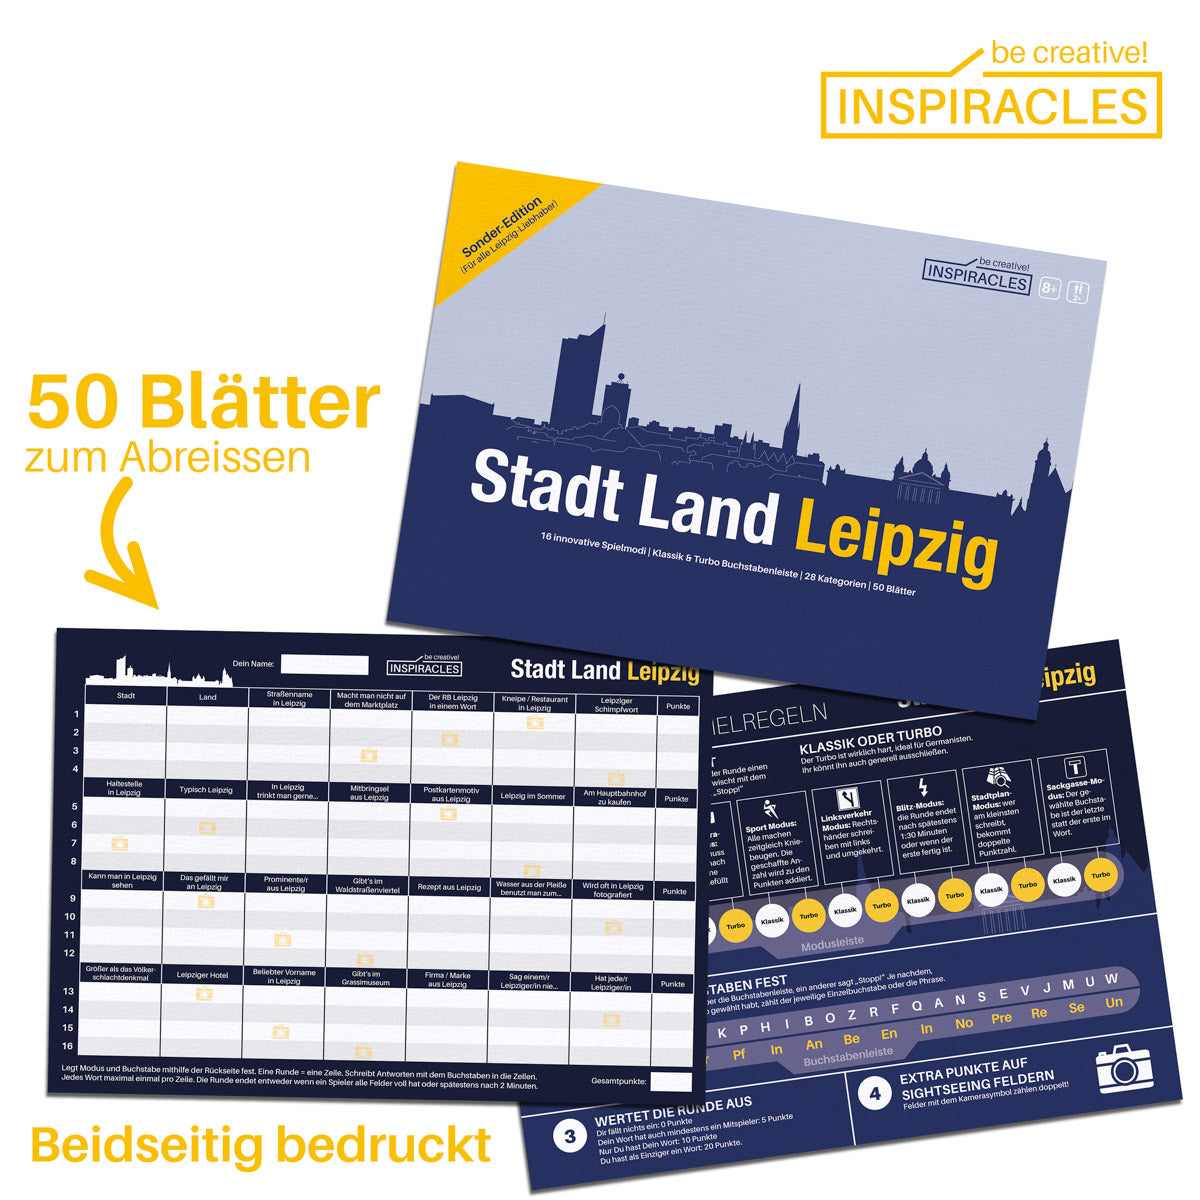 Stadt Land Leipzig